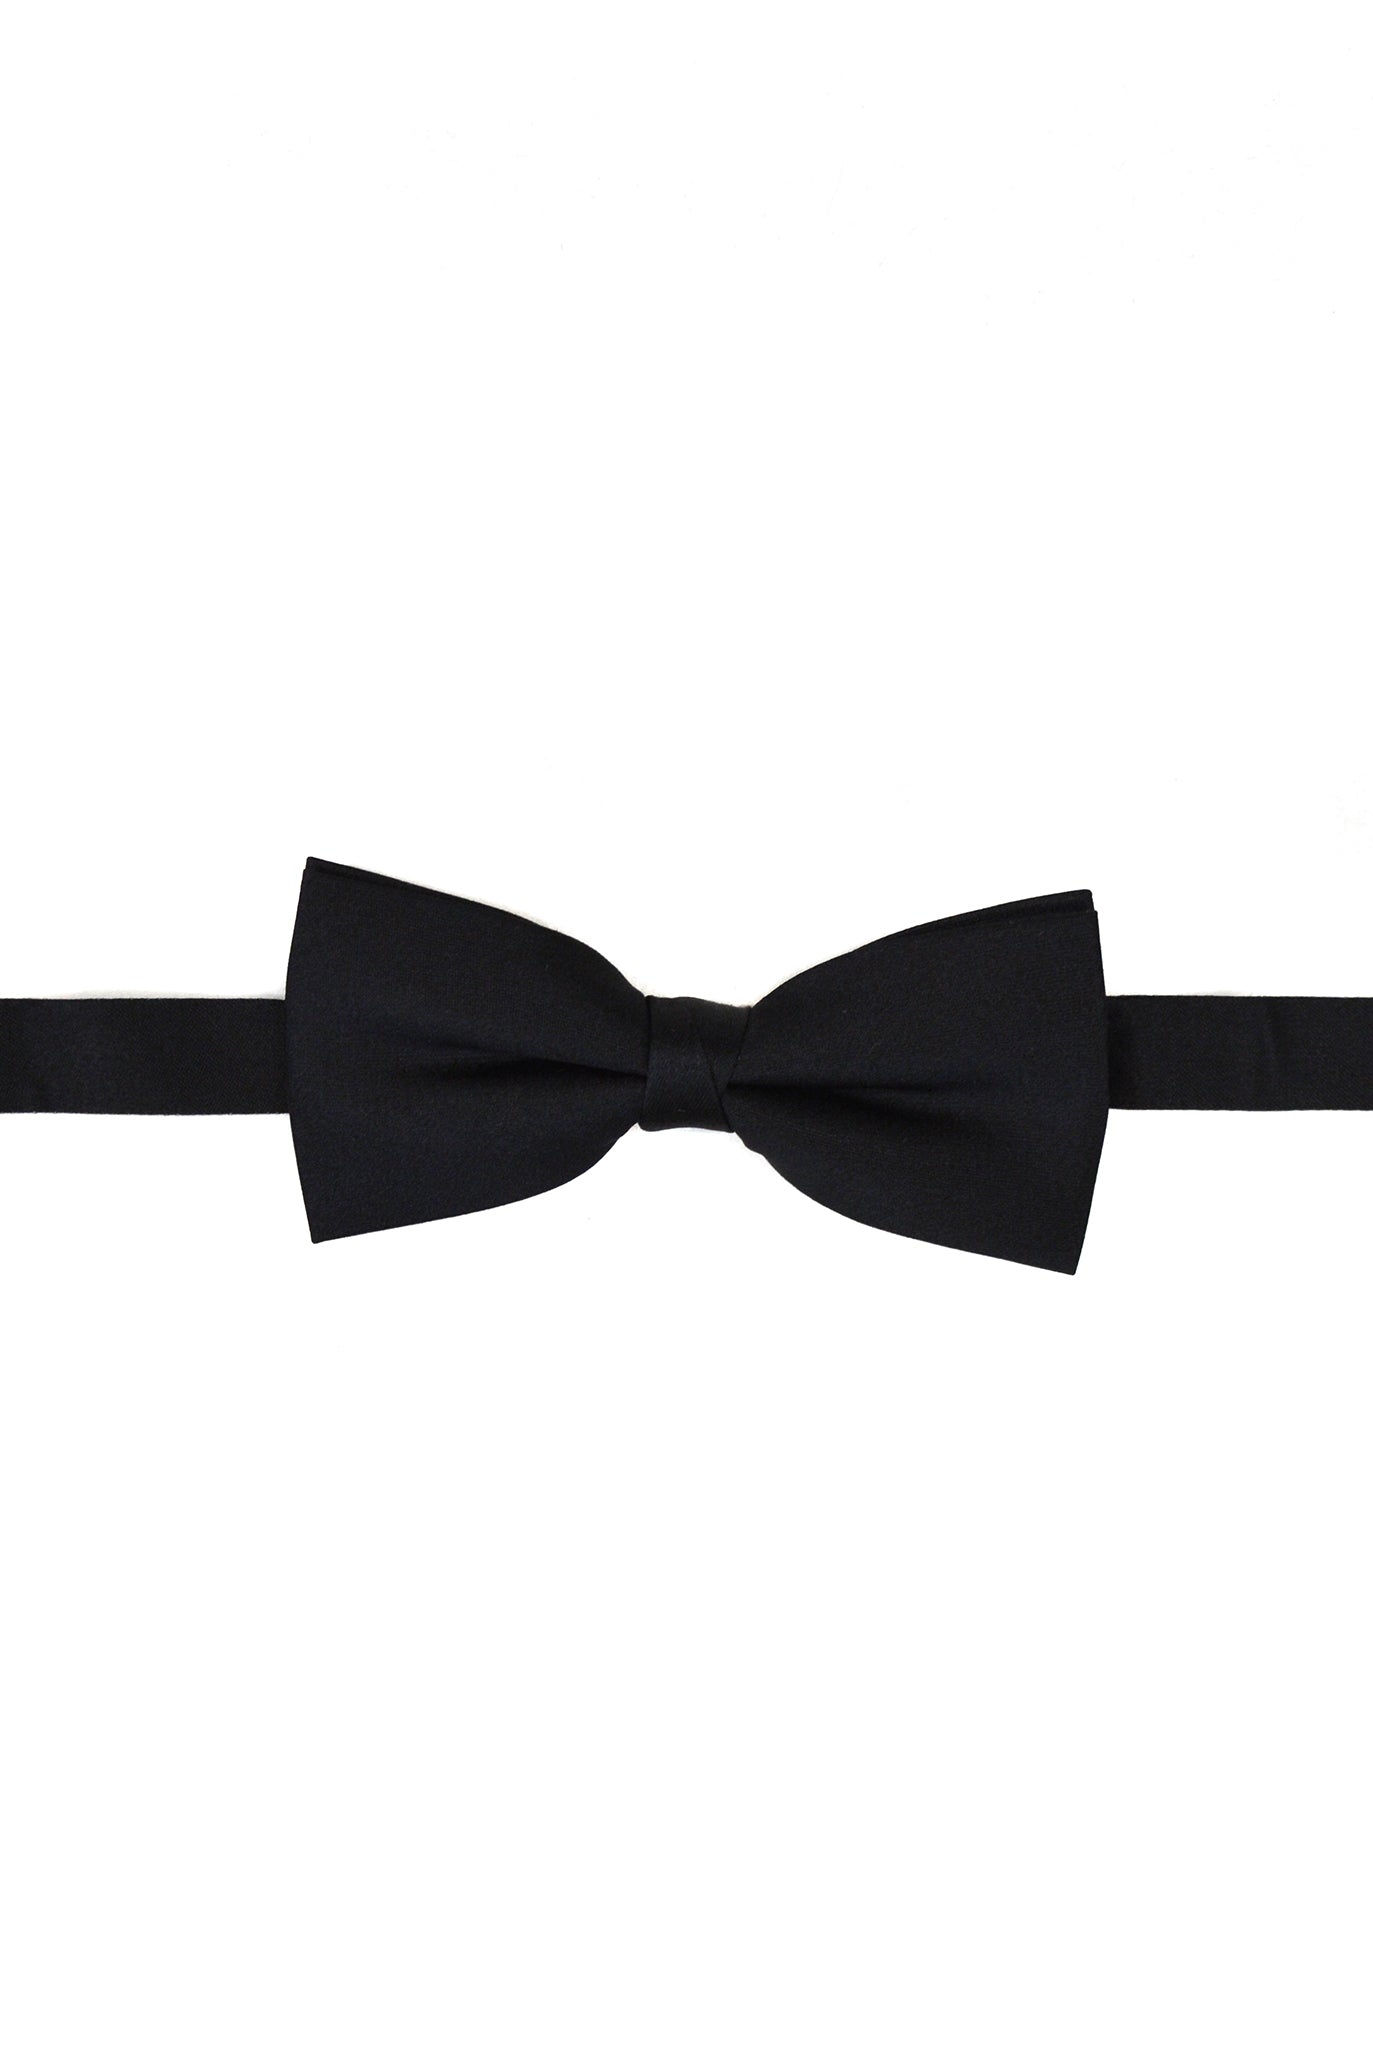 Ernest W. Baker Silk Bow Tie, Black